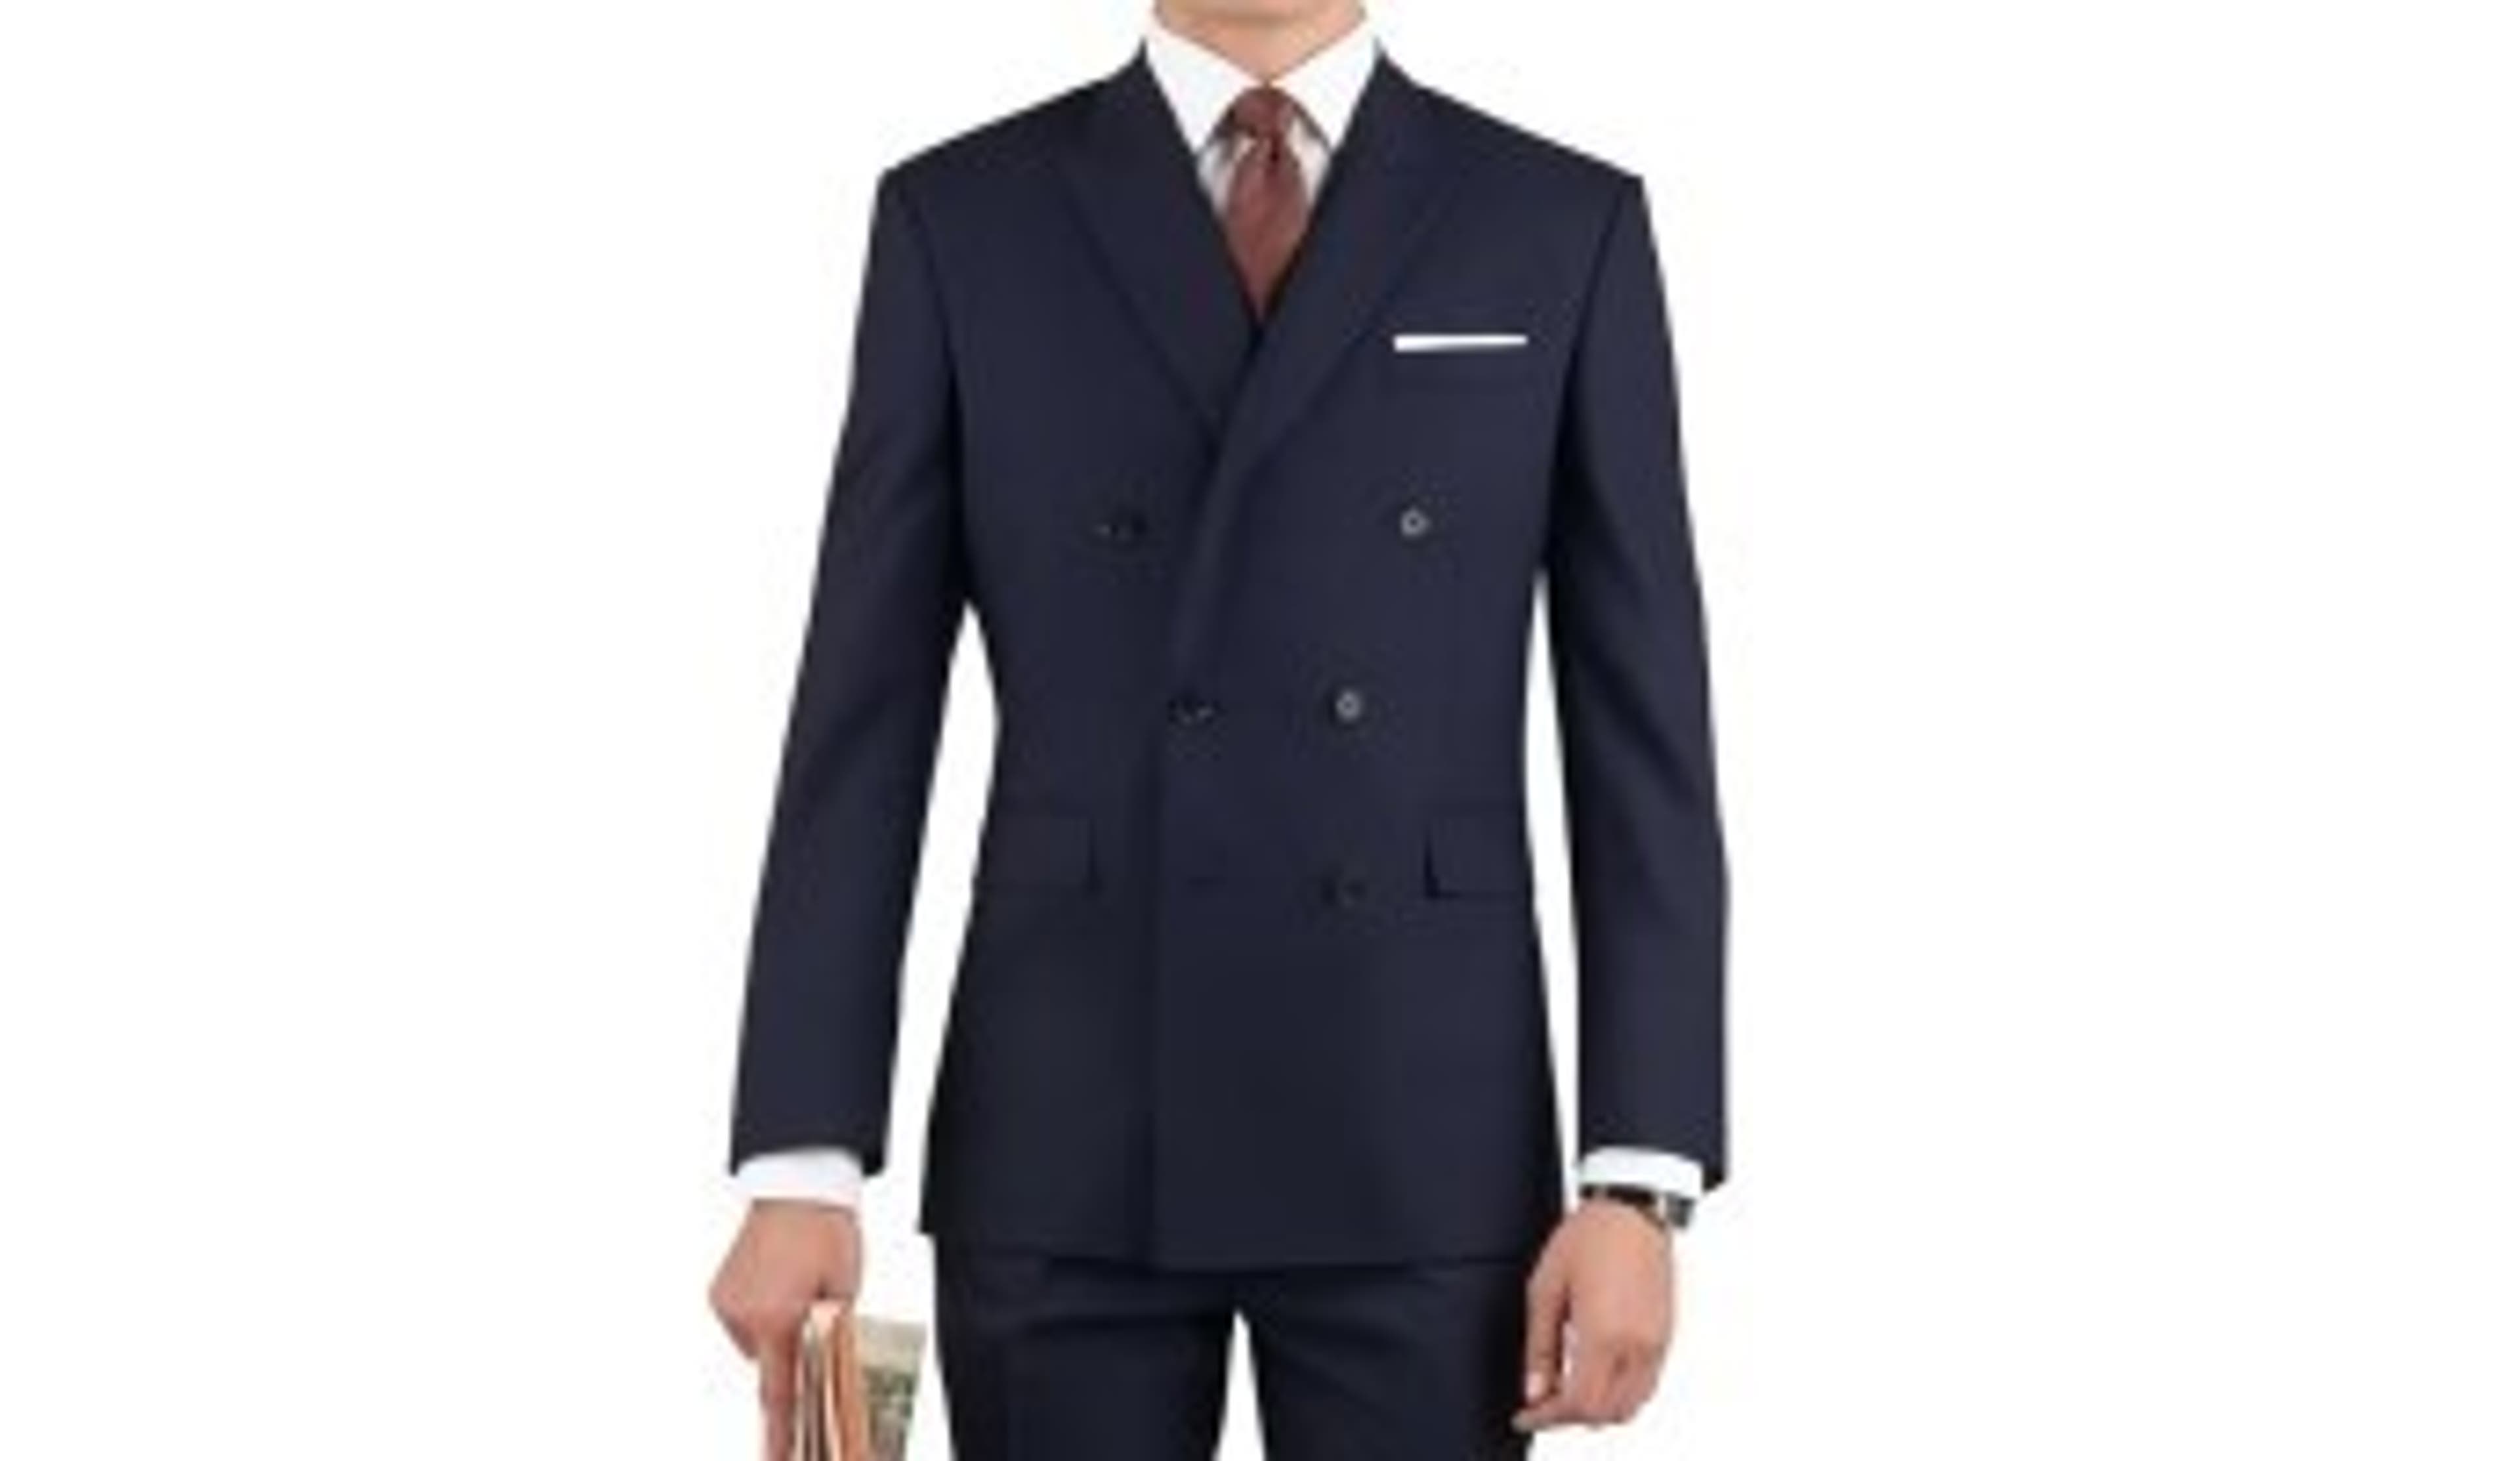  TM Lewin Fitzrovia Barberis Slim Fit Double-Breasted Navy Suit Jacket 